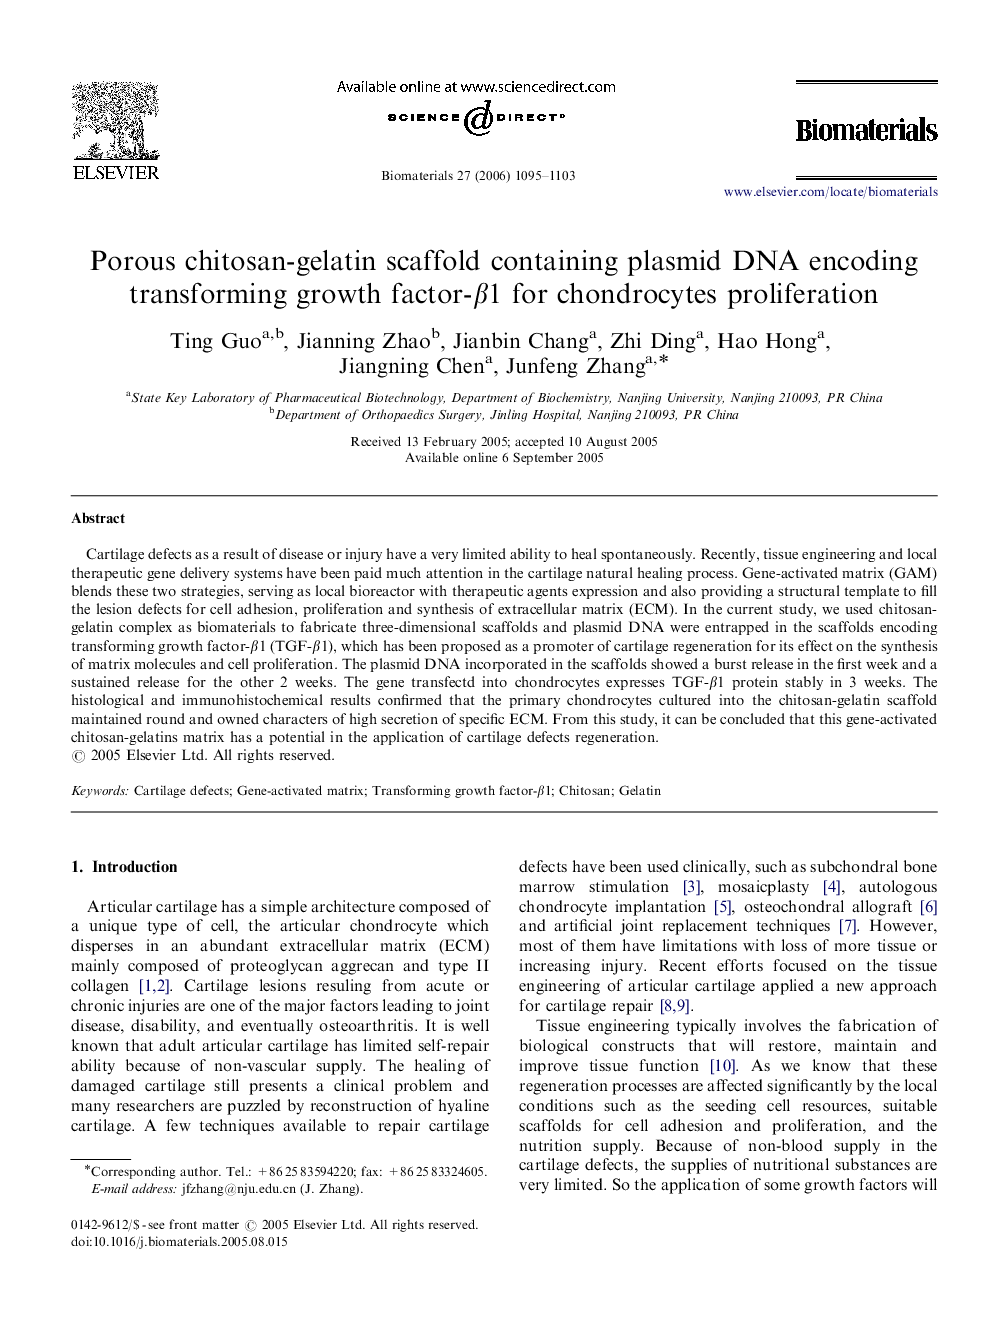 Porous chitosan-gelatin scaffold containing plasmid DNA encoding transforming growth factor-β1 for chondrocytes proliferation